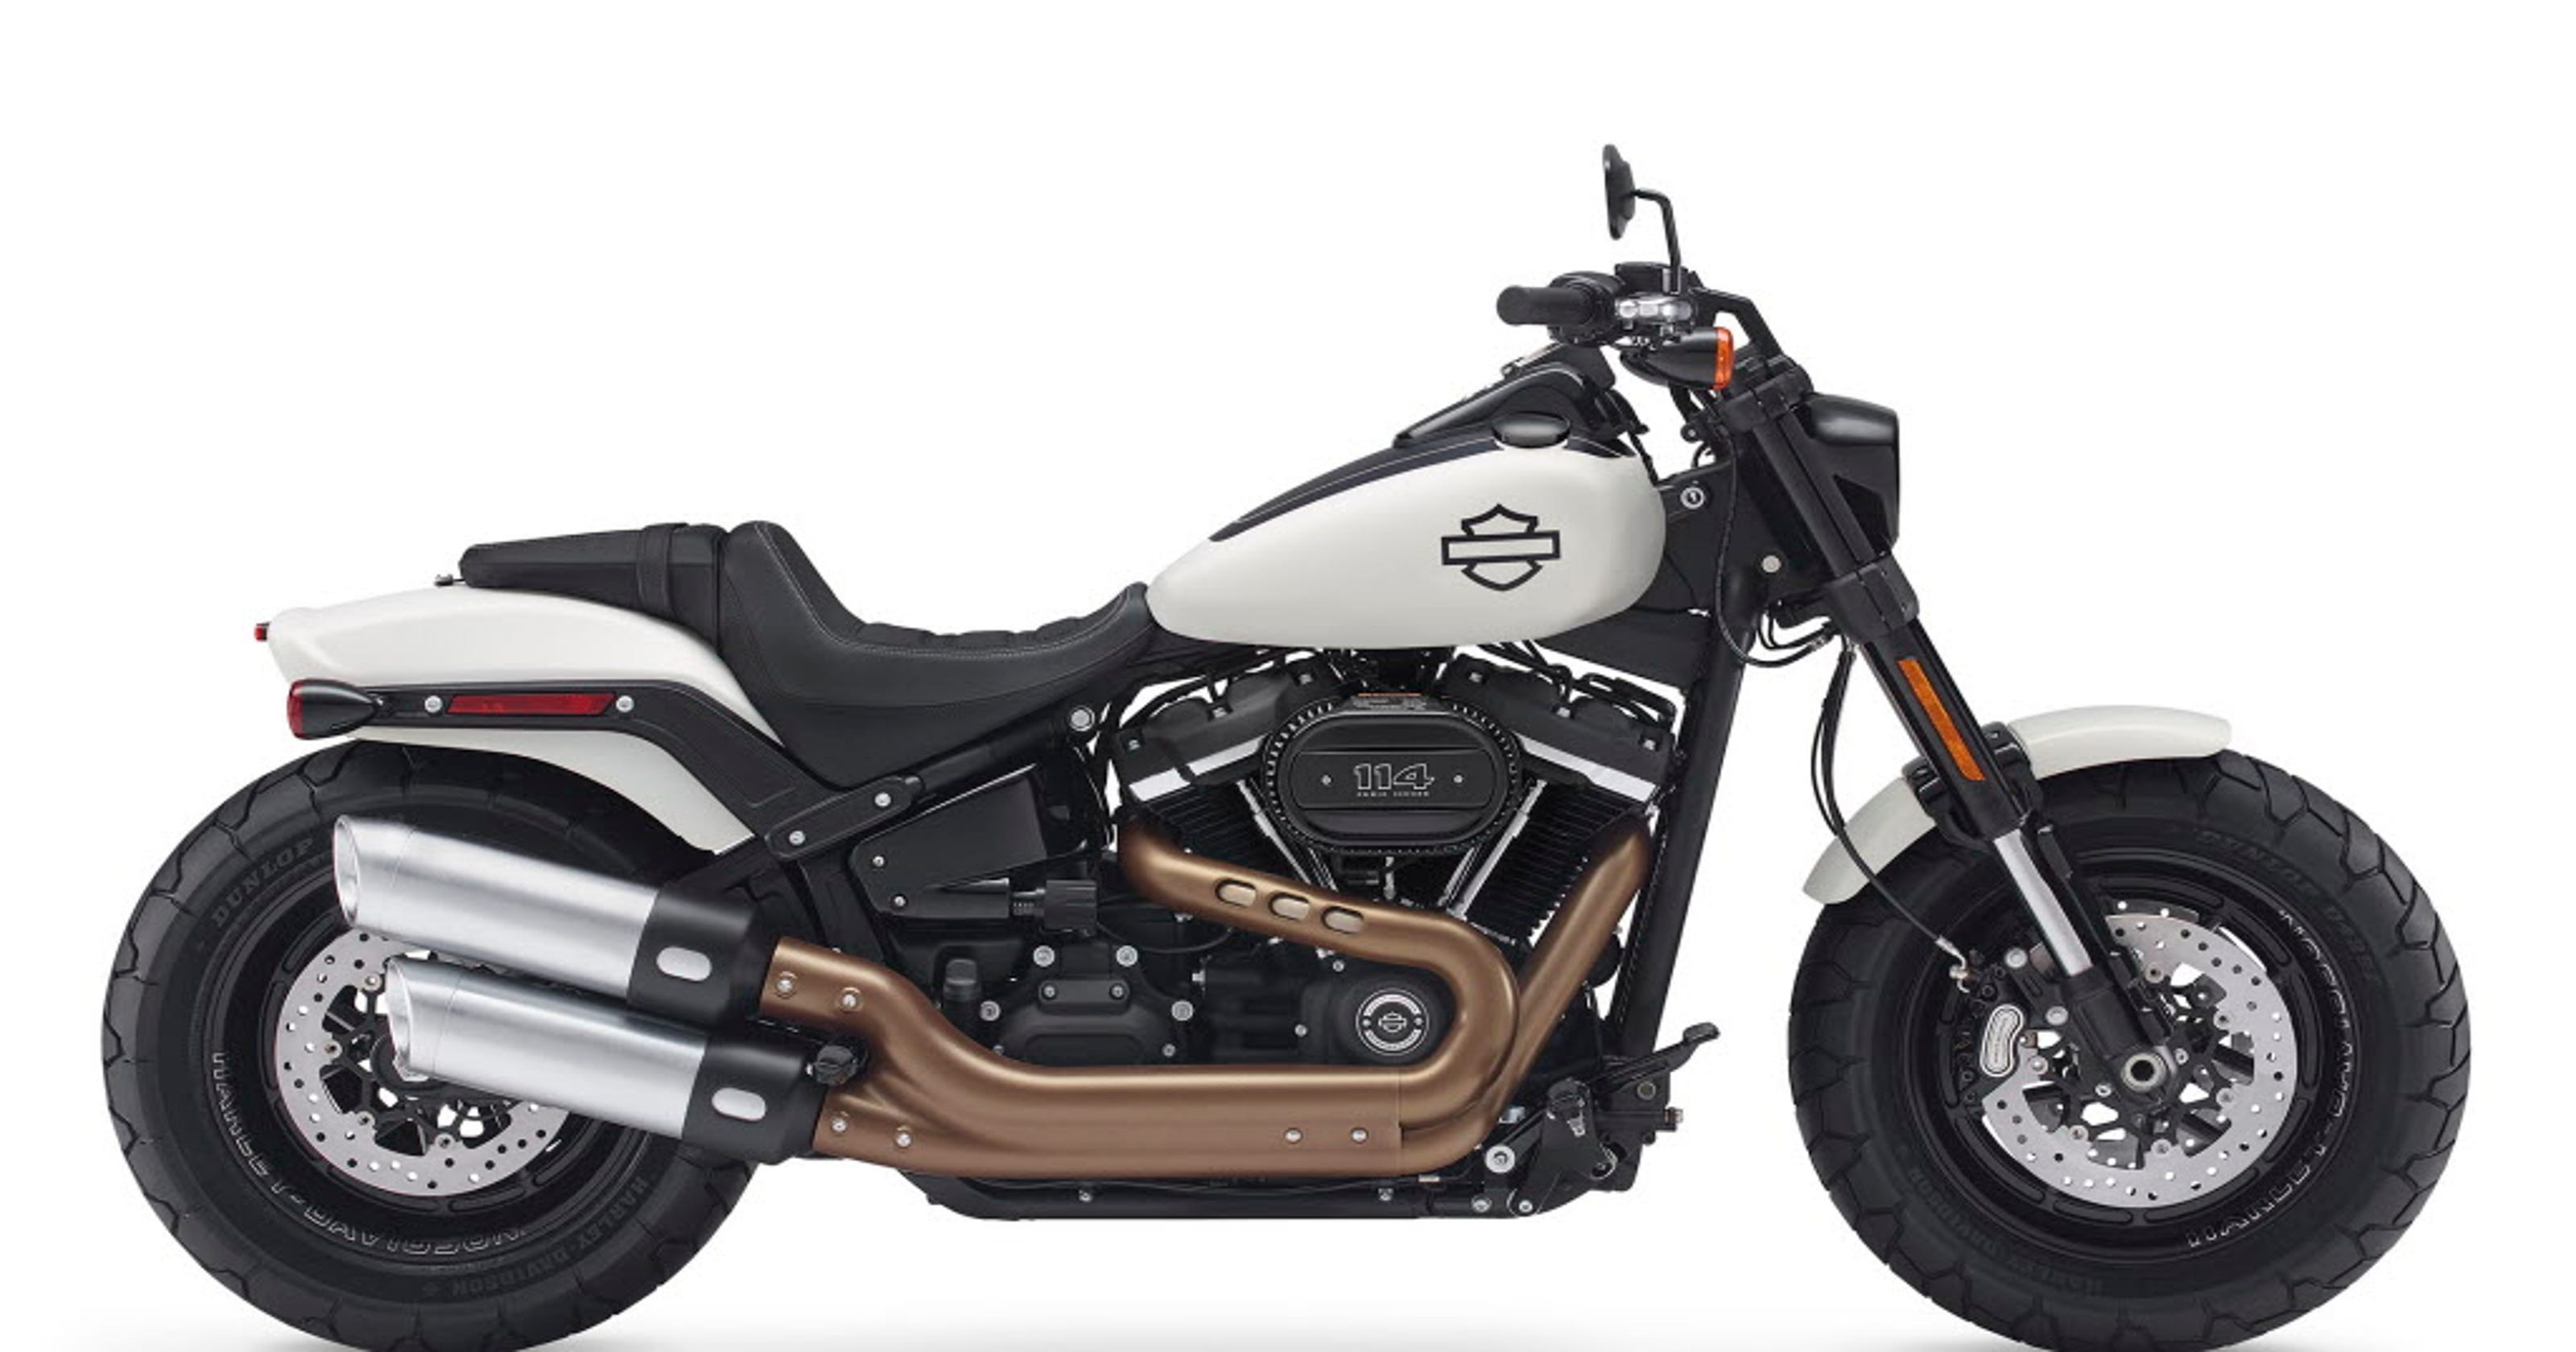 Harley-Davidson reveals eight new cruiser motorcycles